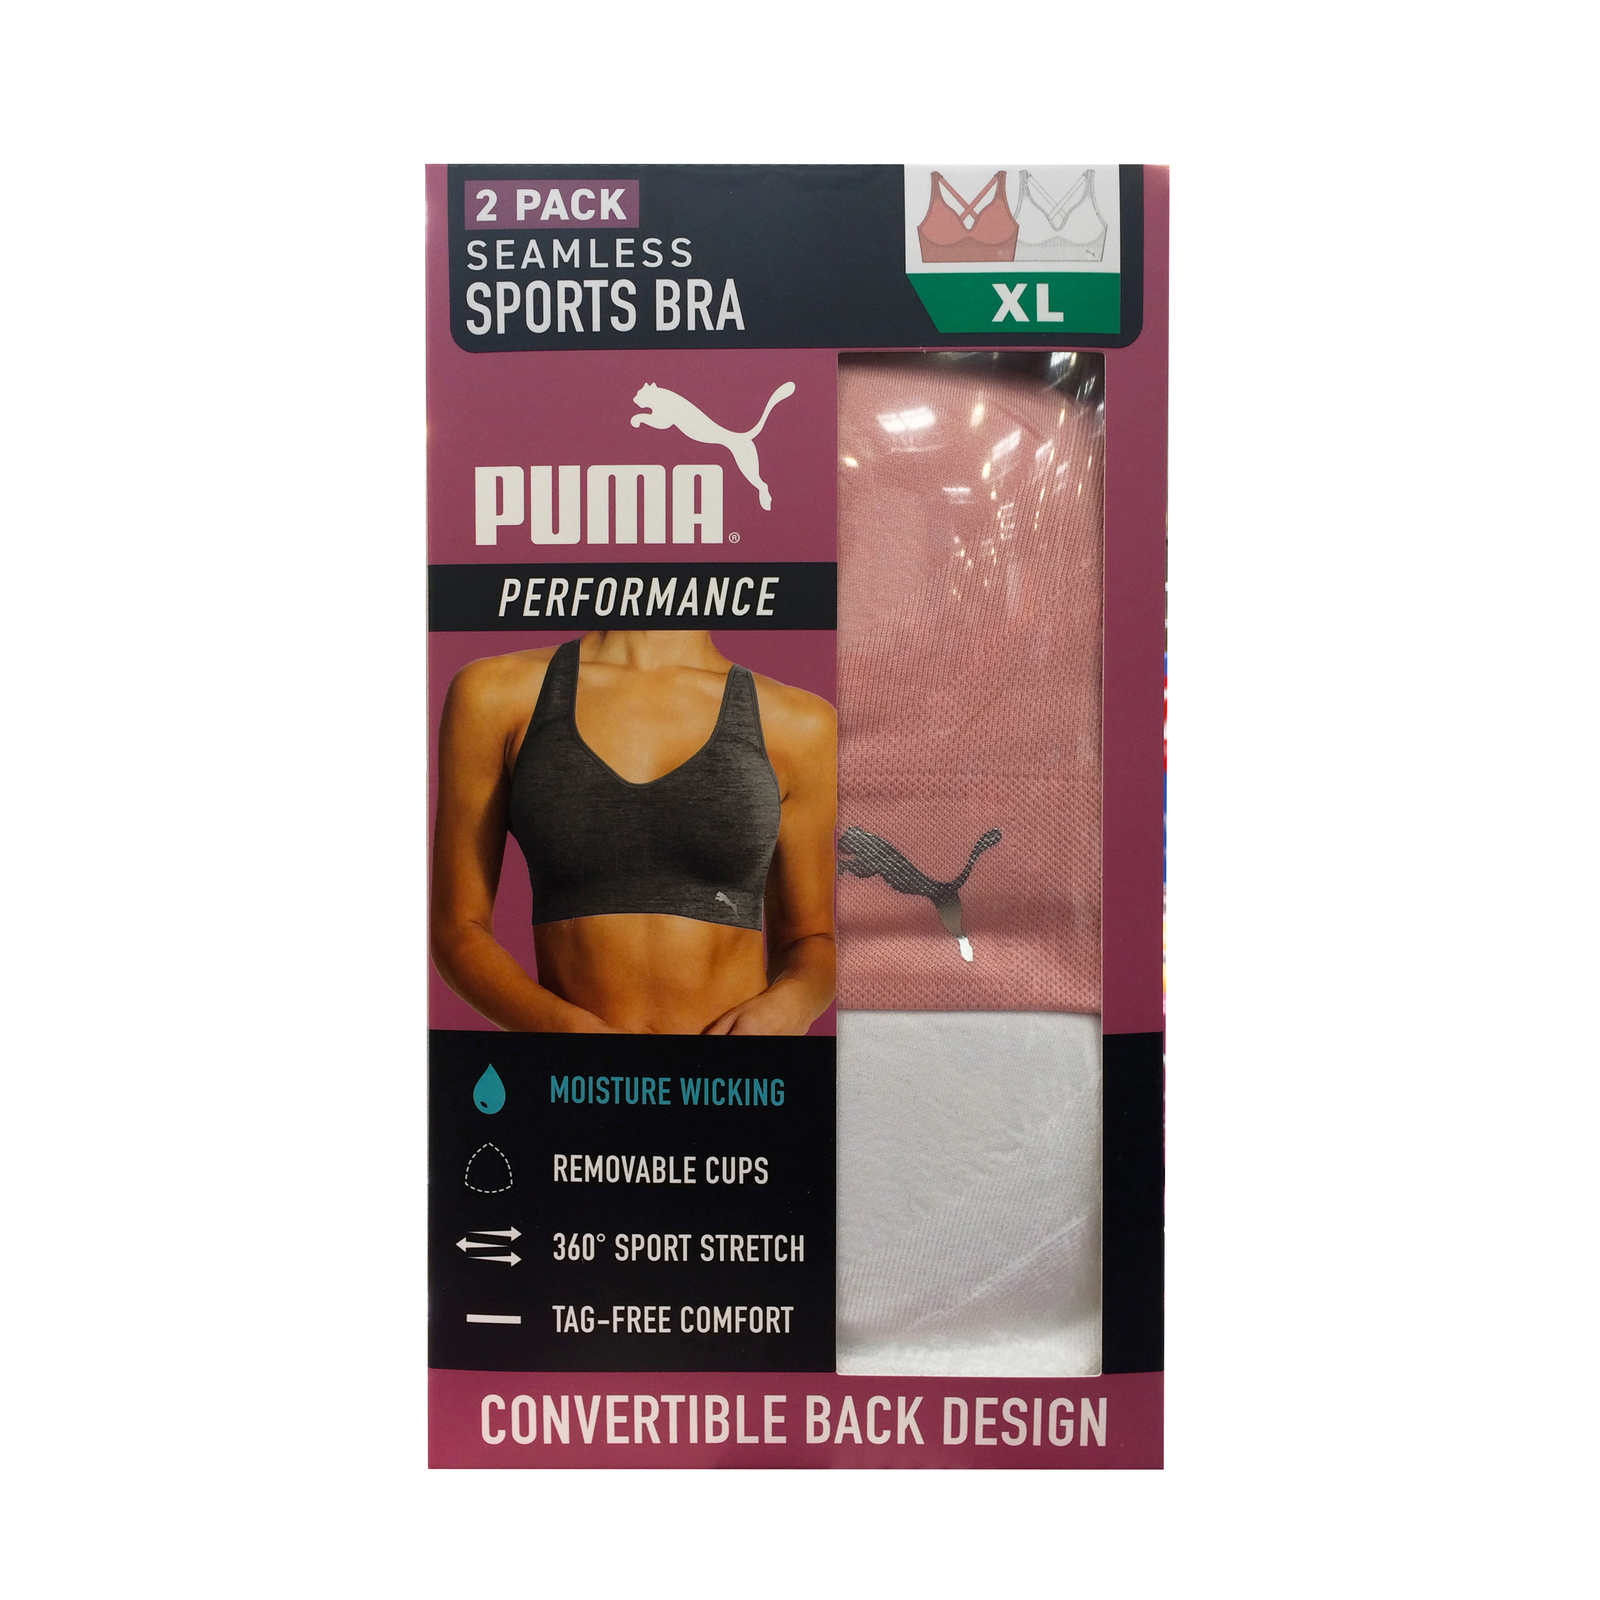 Puma Performance Women's Seamless Sports Bra 2 Pack Convertible Activewear Sz.XL - $23.99